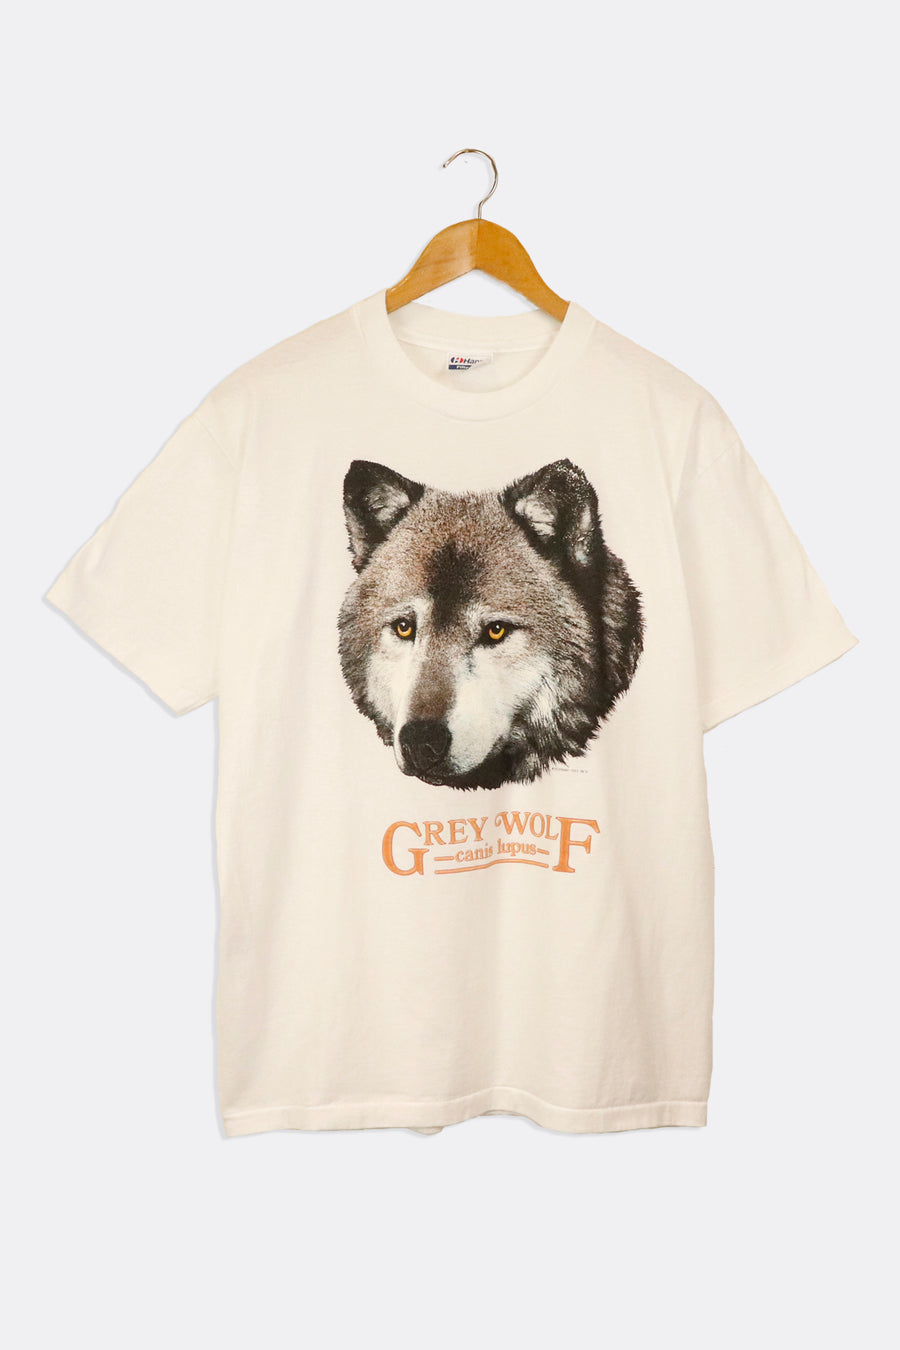 Vintage 1991 Grey Wold Head Graphic Canis Lupus T Shirt Sz L